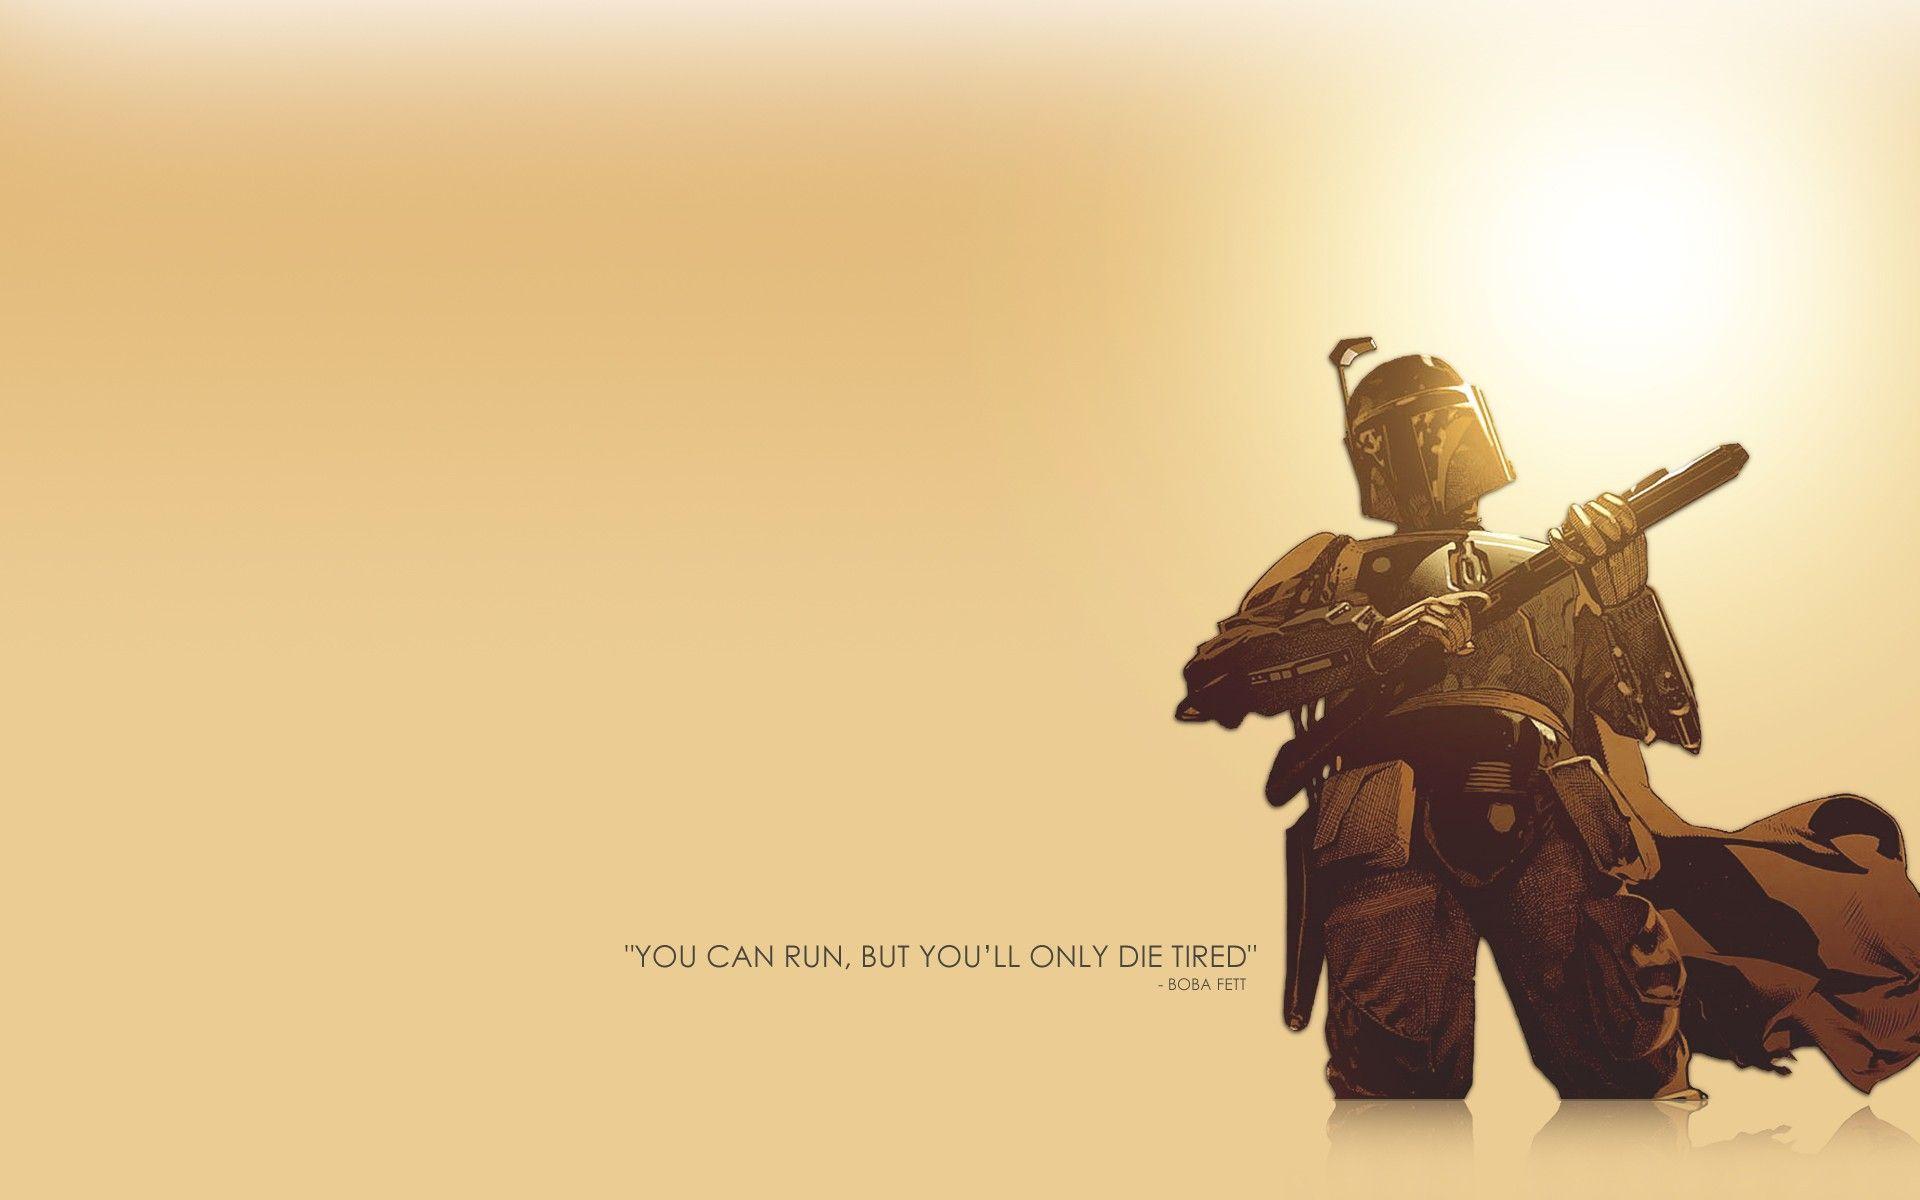 Boba Fett Star Wars Wallpaper. LOLd. Wallpaper Picture